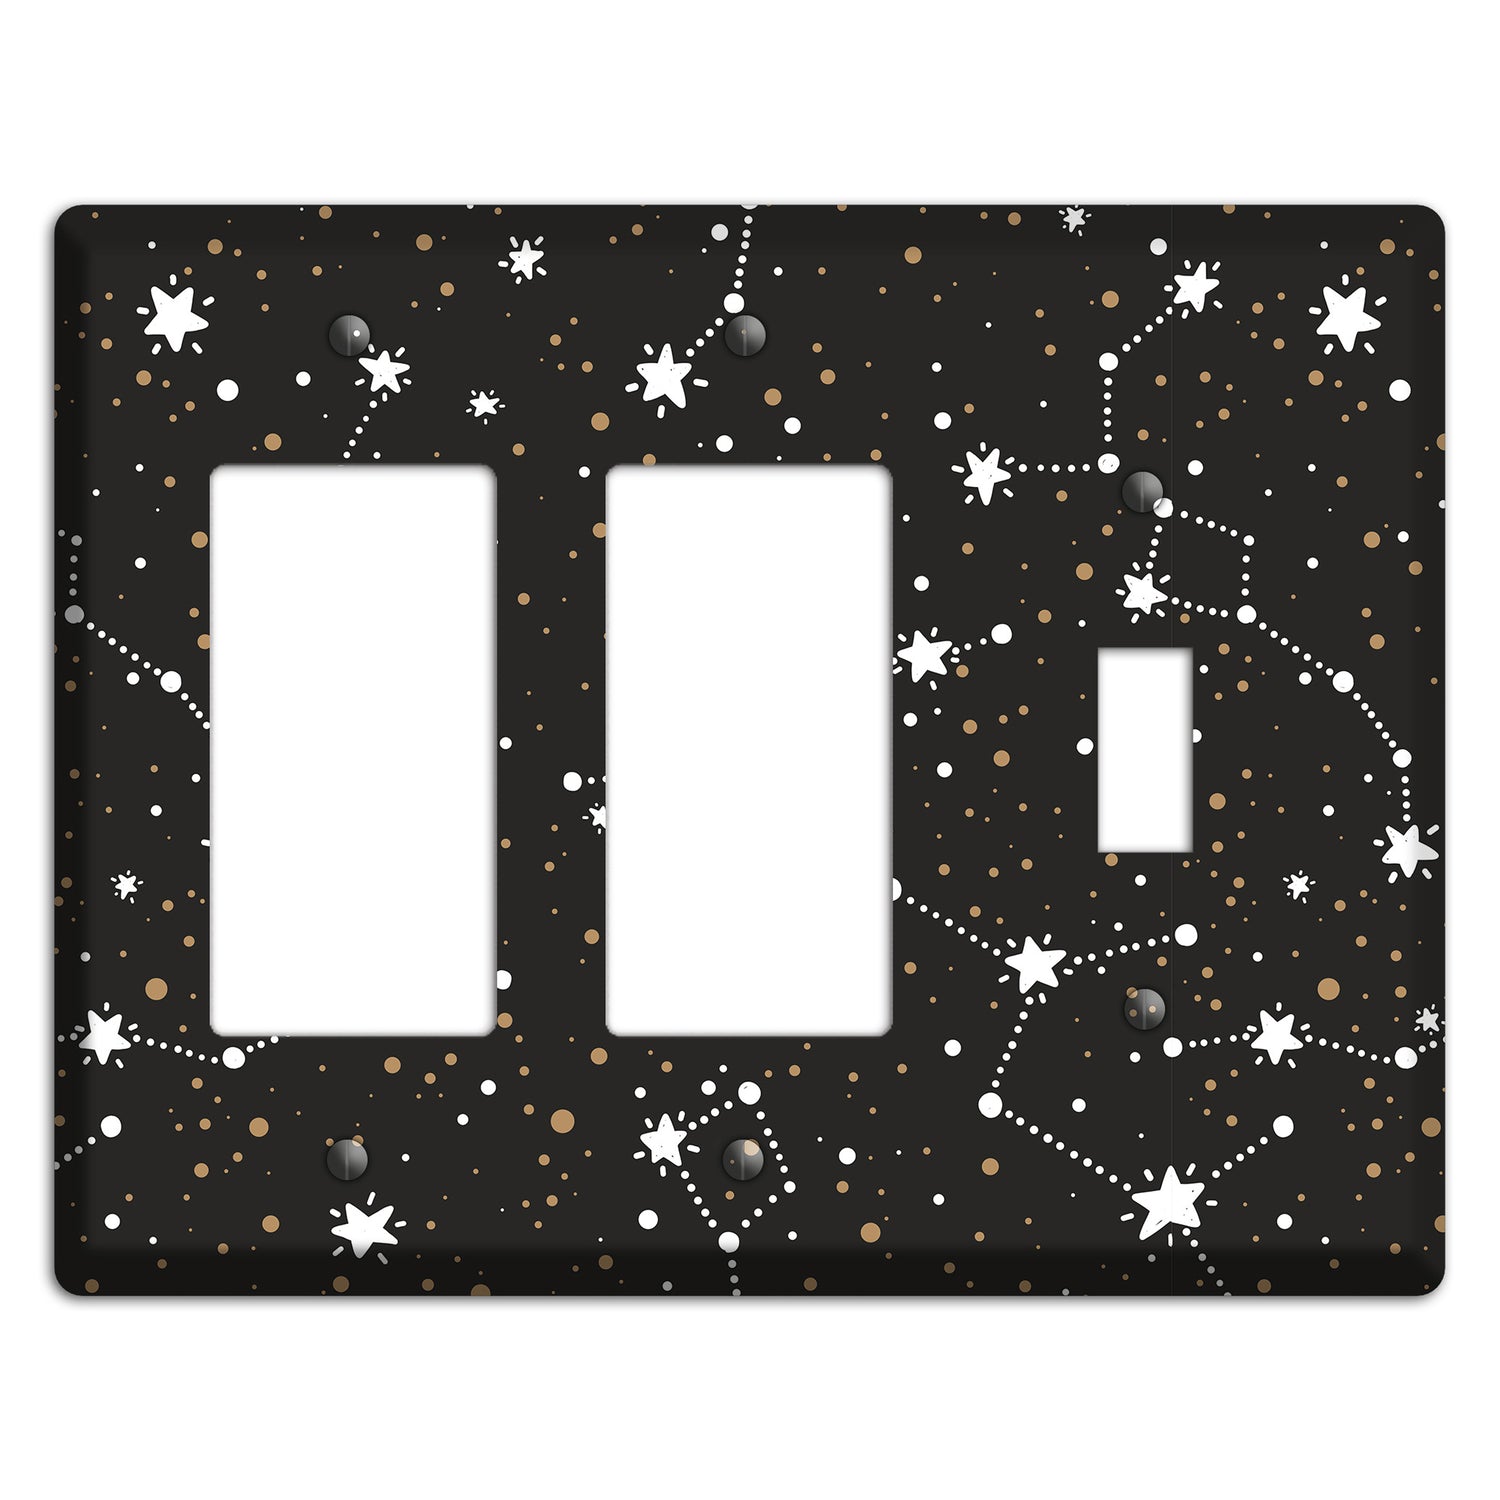 Constellations Black 2 Rocker / Toggle Wallplate